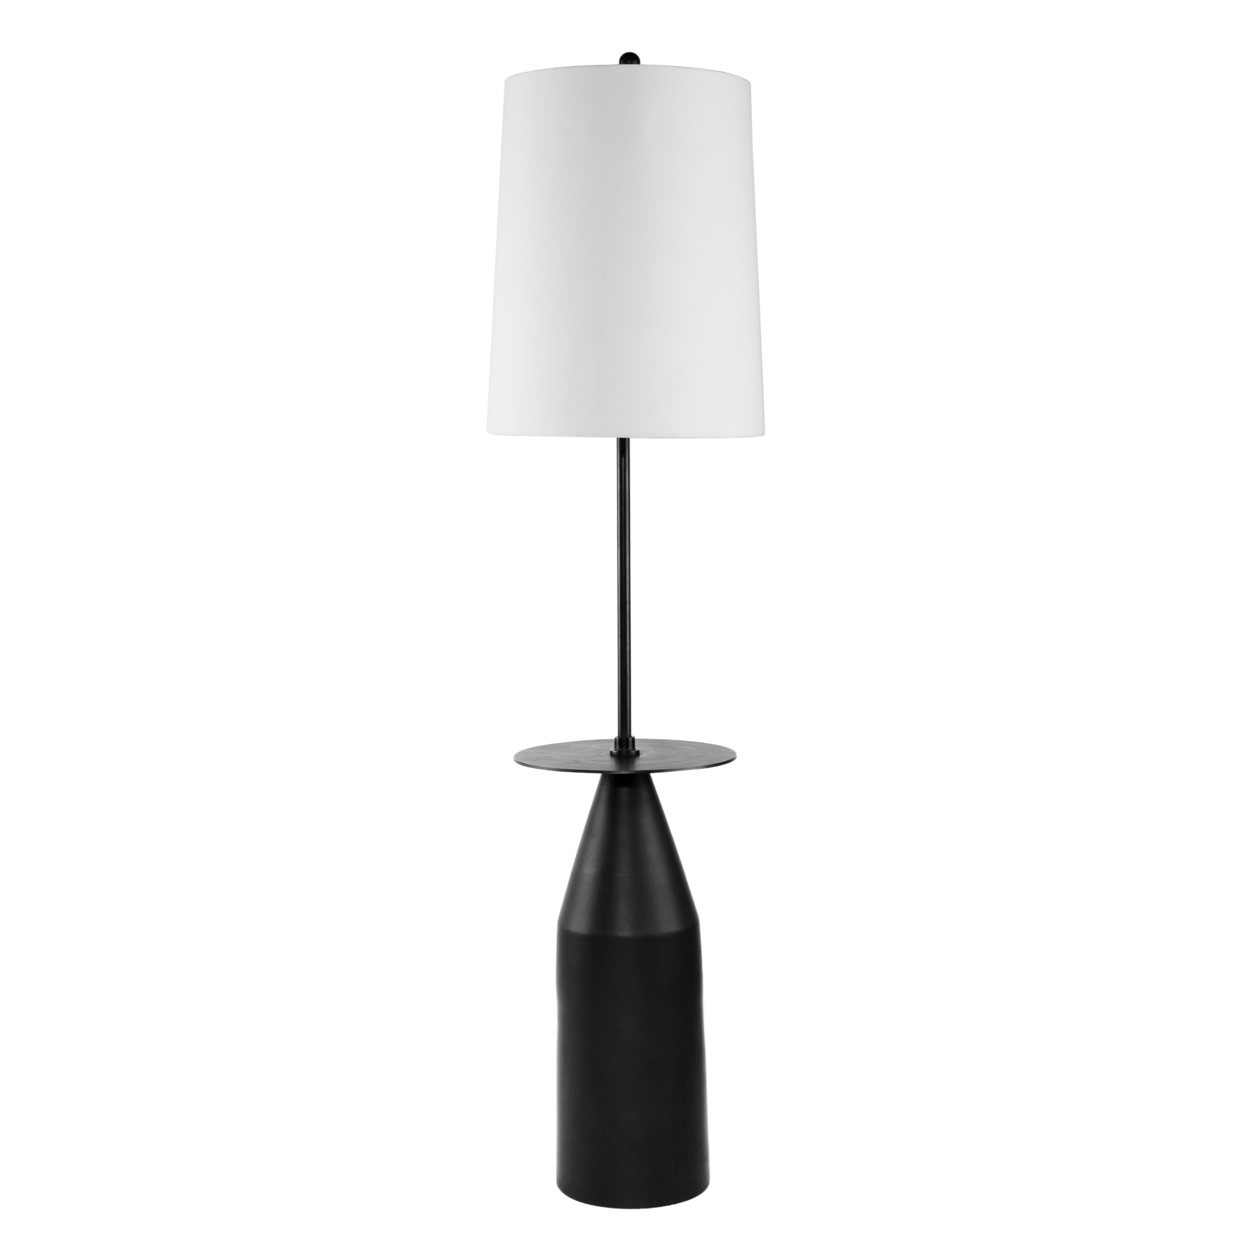 61 Inch Modern Floor Lamp, Round Drum Shade, Aluminum Frame, White, Black, Saltoro Sherpi